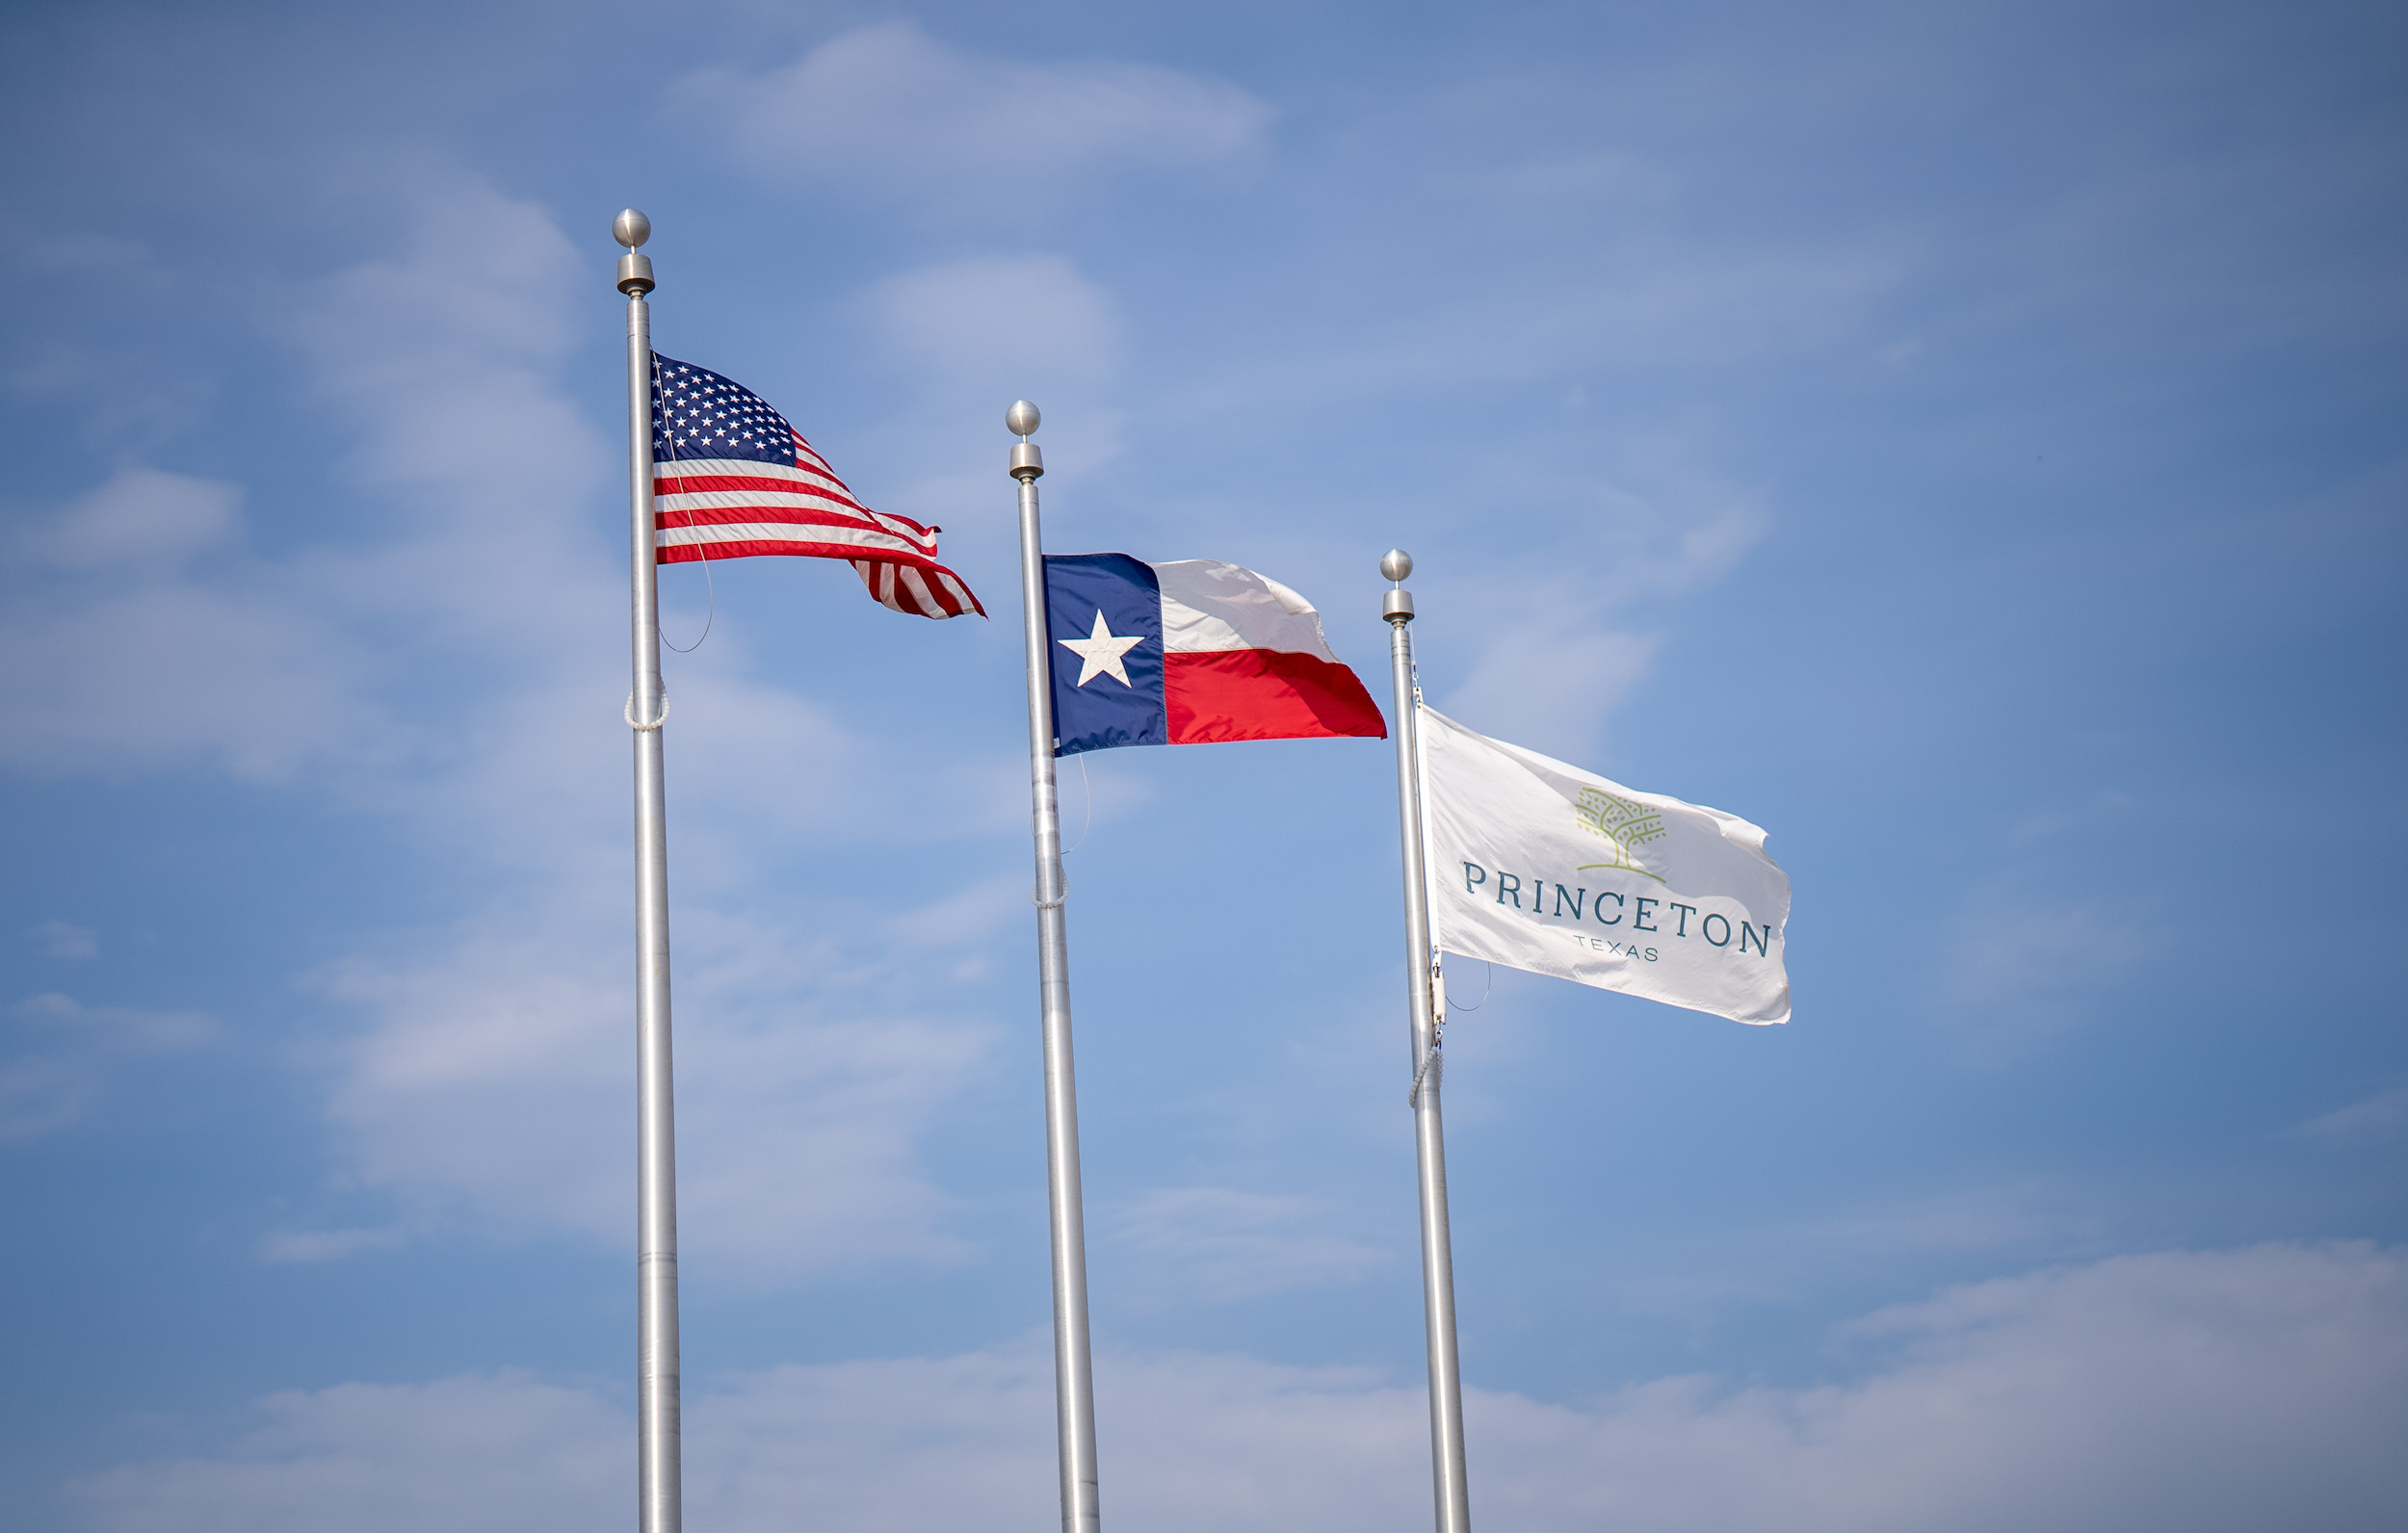 American flag, texas flag annd princeton flag